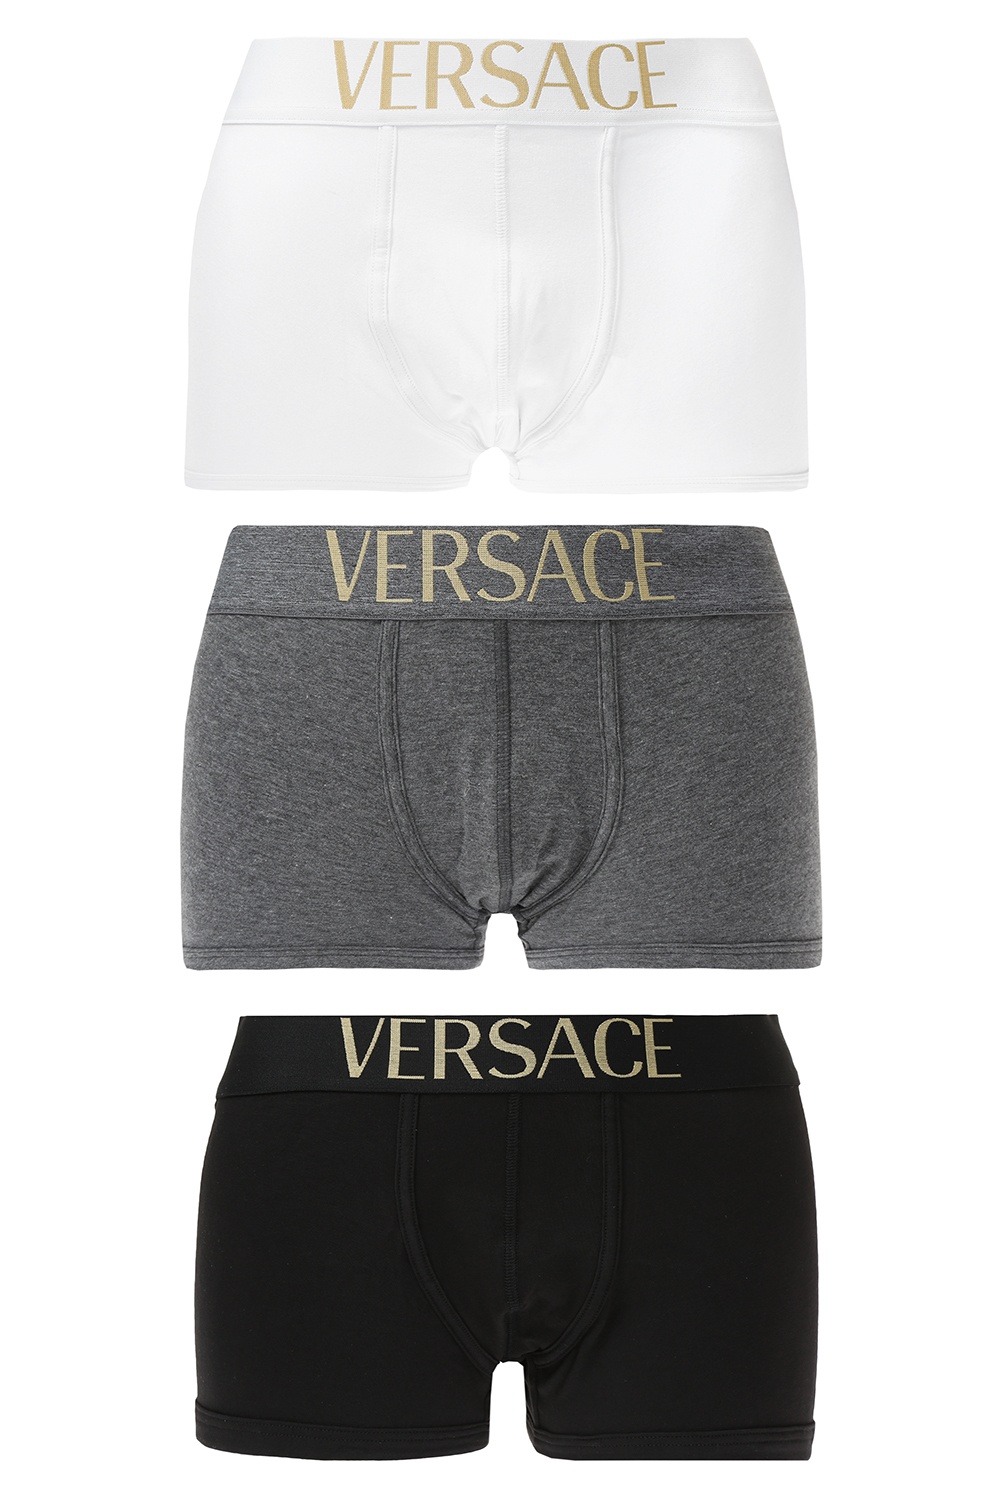 versace boxers pack